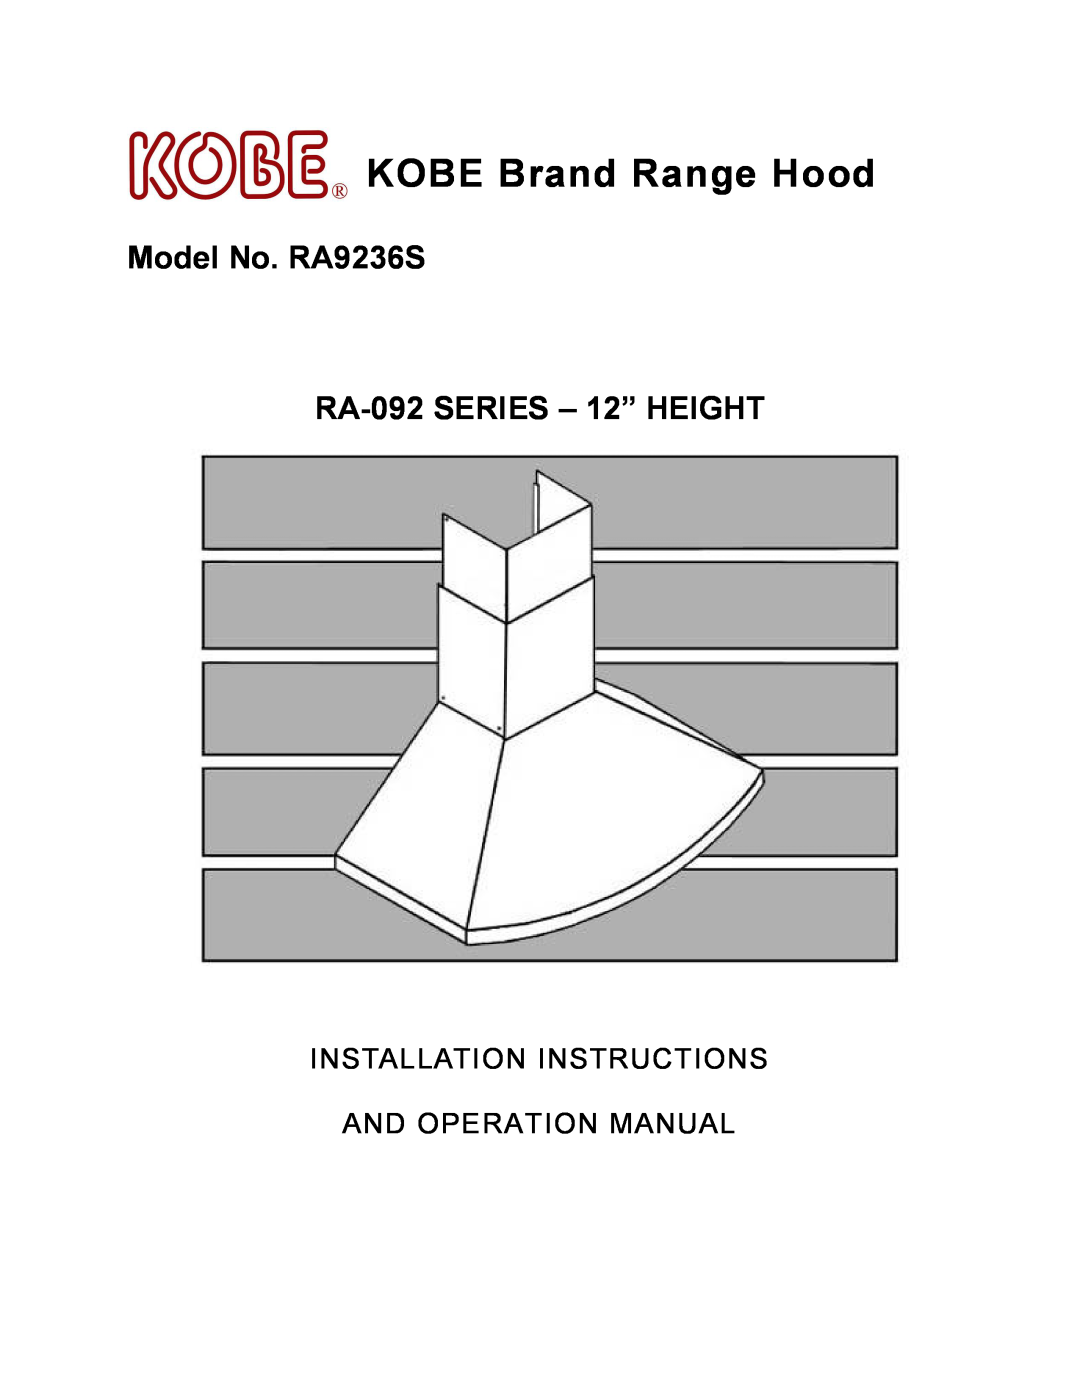 Kobe Range Hoods manual KOBE Brand Range Hood, Model No. RA9236S RA-092 SERIES 12 HEIGHT 